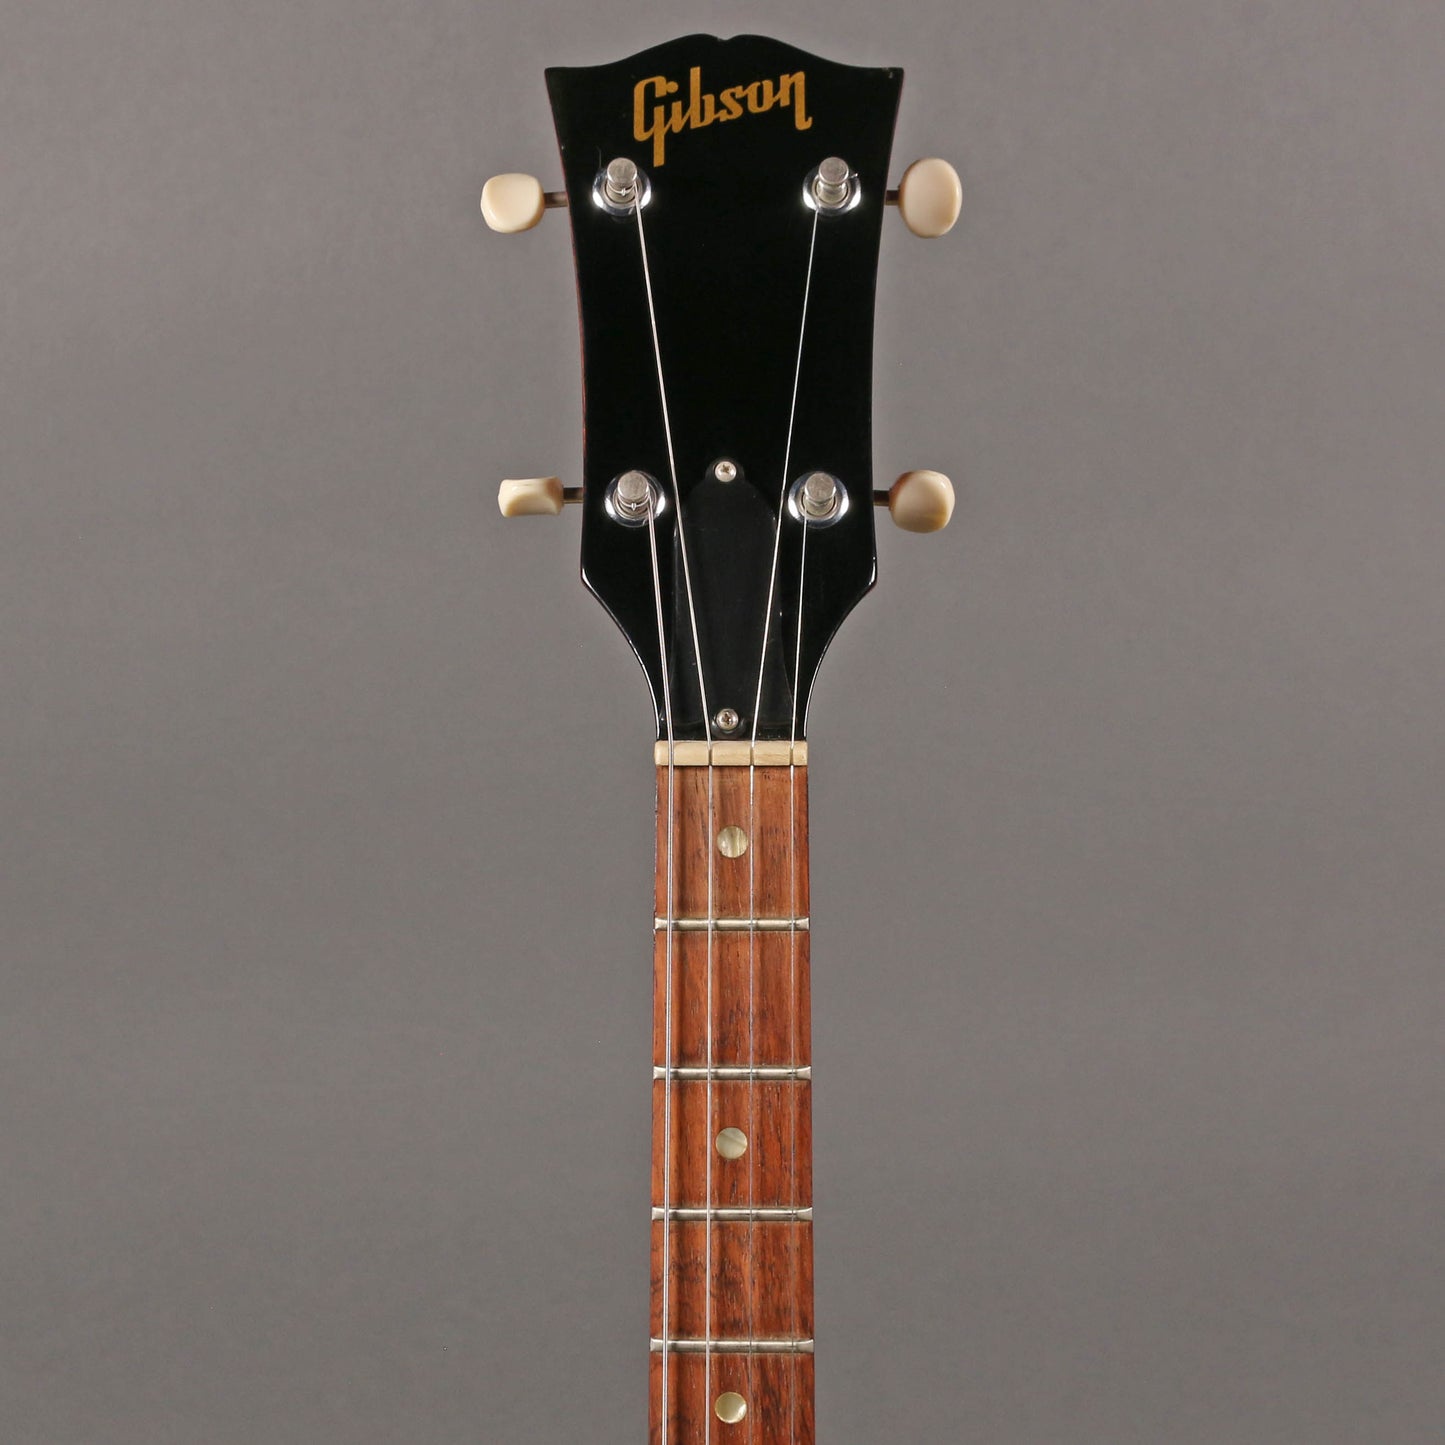 Late 60s Gibson TG-25 [*Kalamazoo Collection]